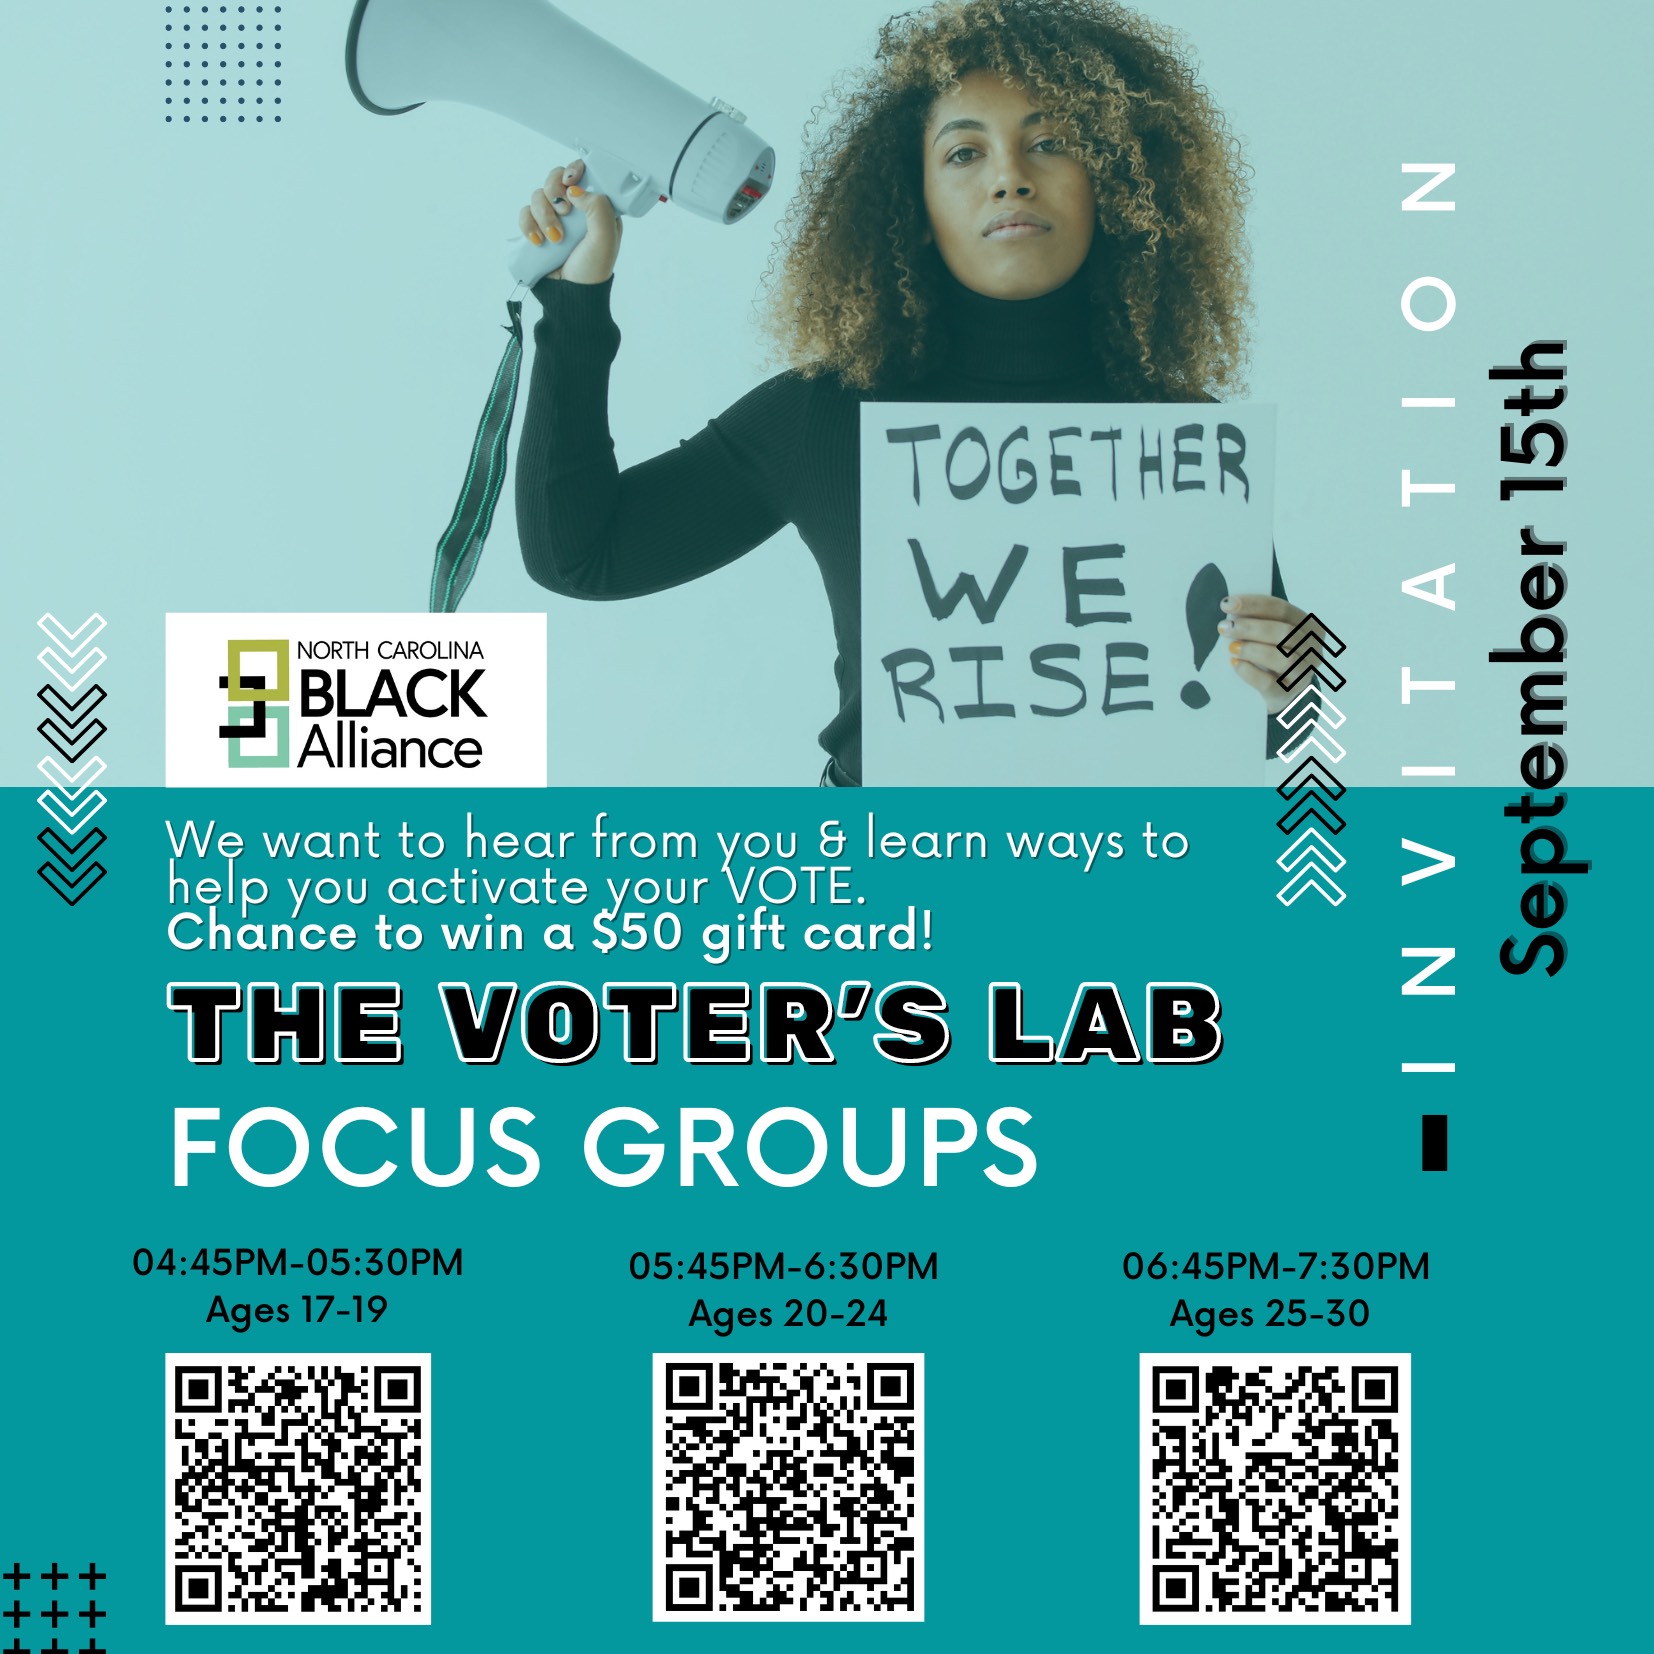 Voters Lab Focus Group